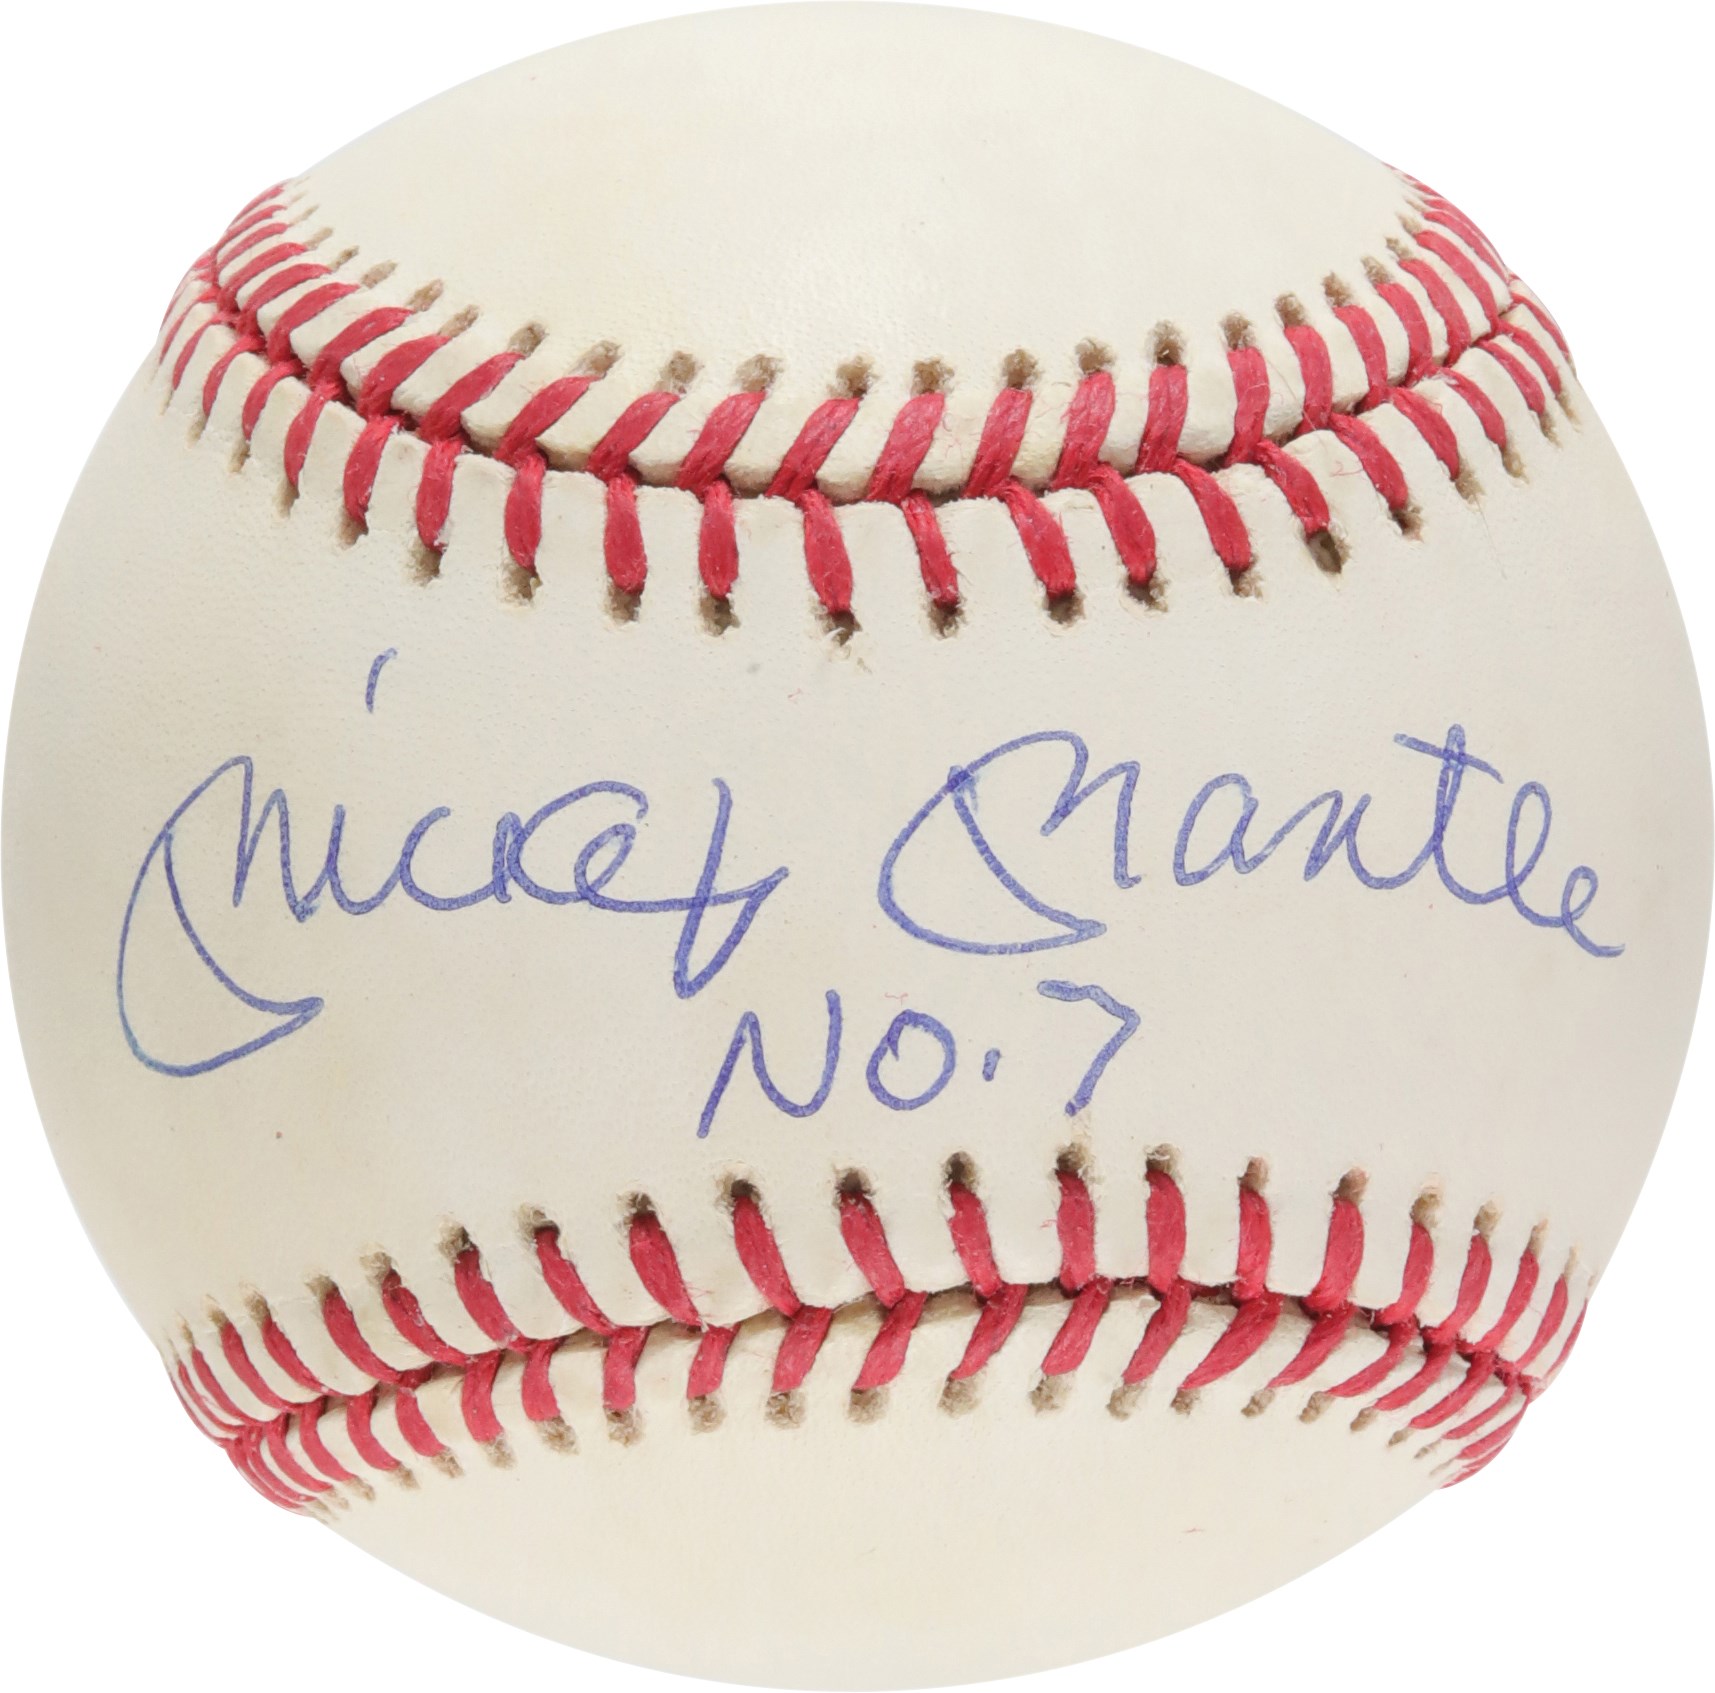 Mickey Mantle "No. 7" Single-Signed Baseball (PSA MINT 9 Signature)